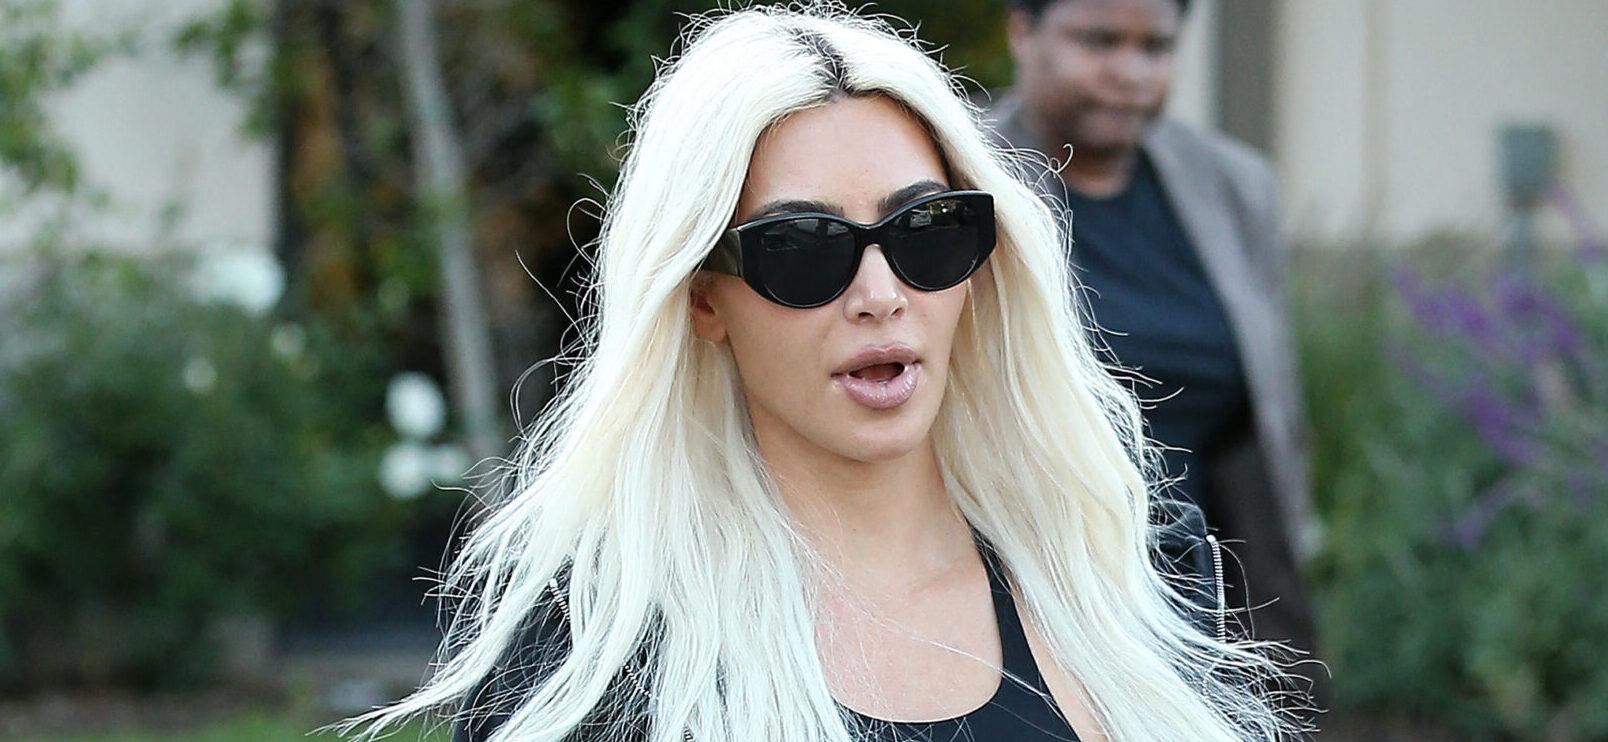 Kim Kardashian is seen leaving her son's basketball game